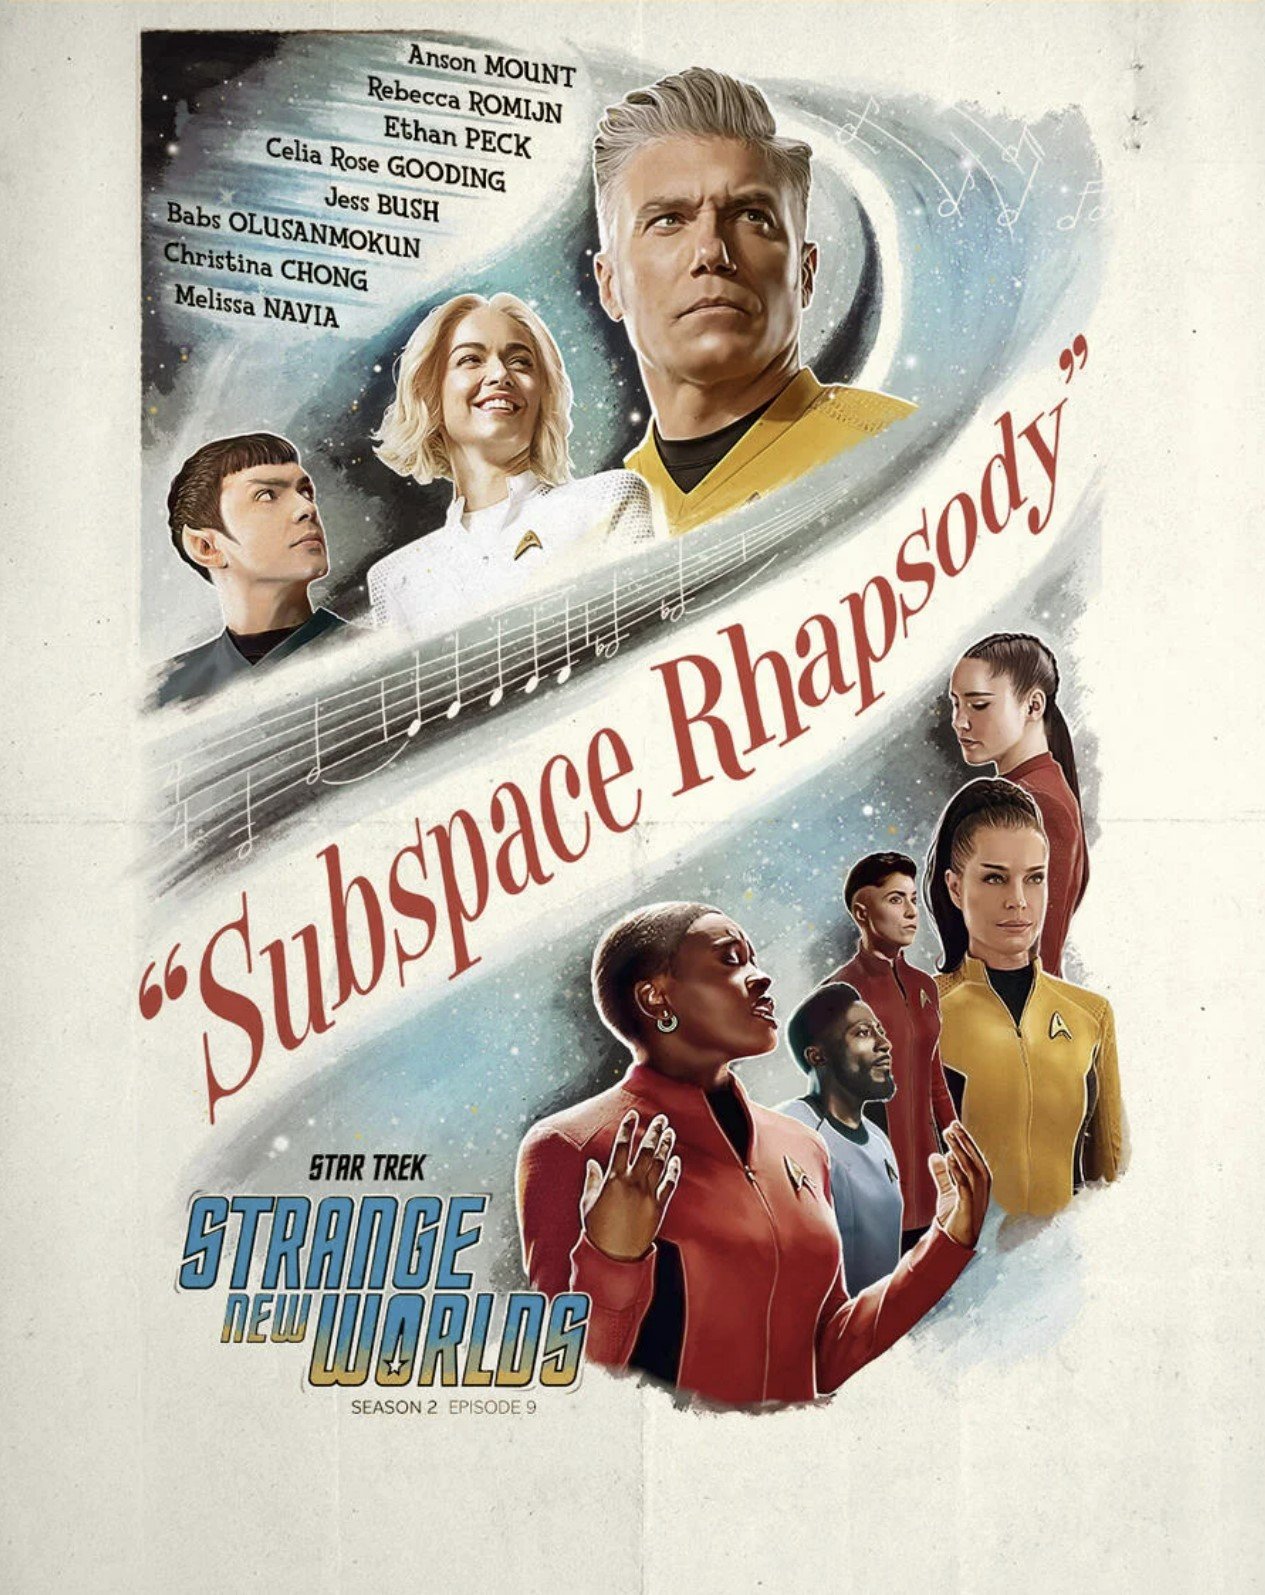   Star Trek.com / Paramount+  